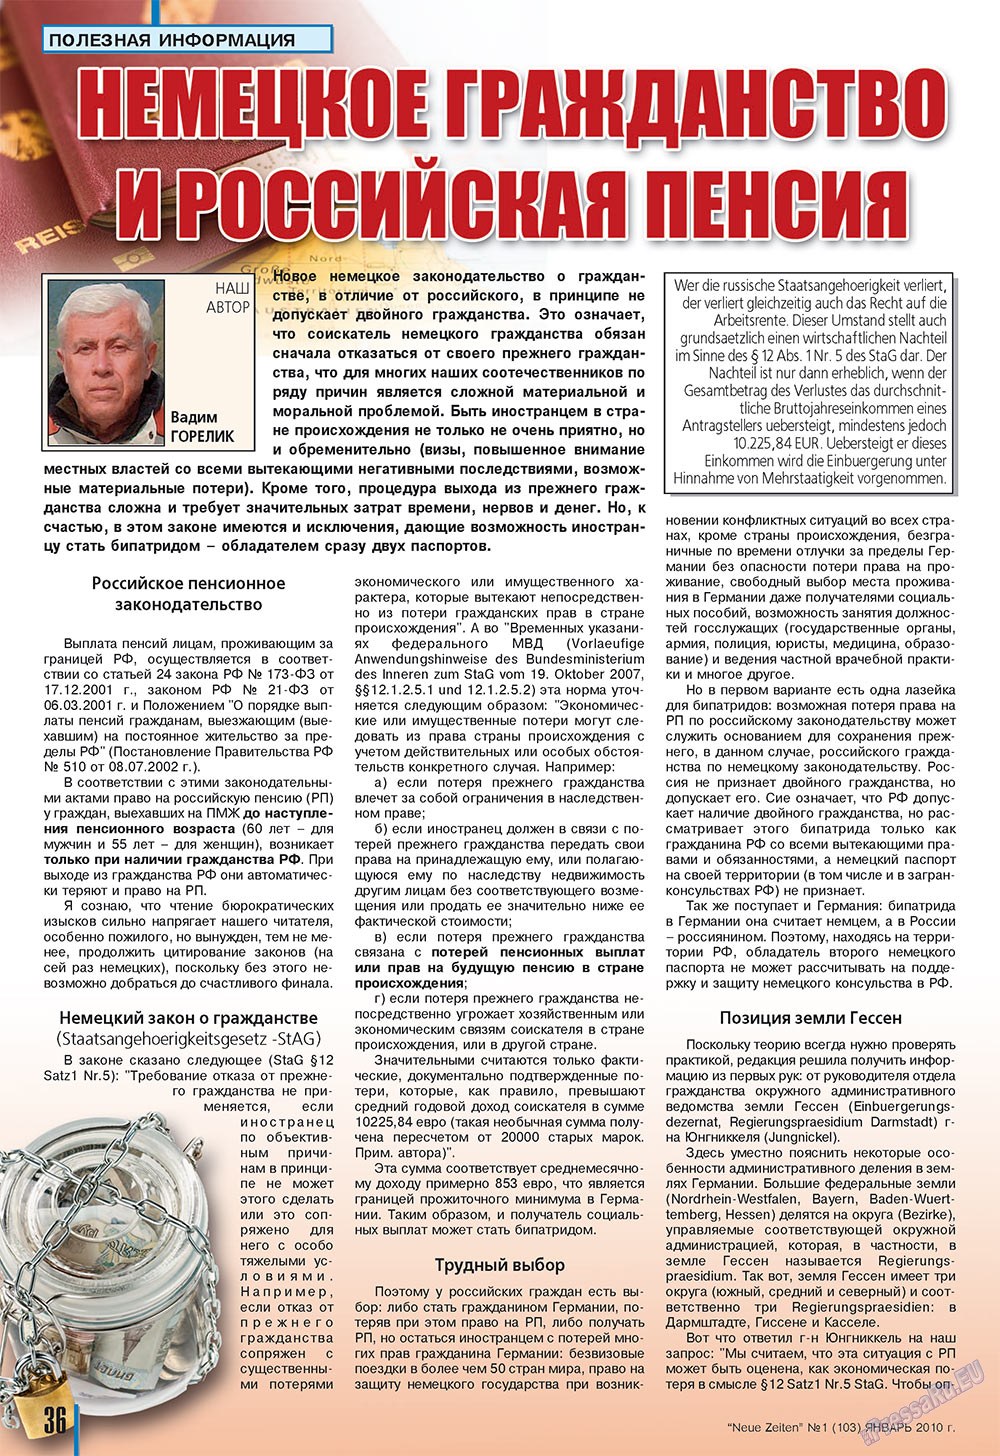 Neue Zeiten (журнал). 2010 год, номер 1, стр. 36